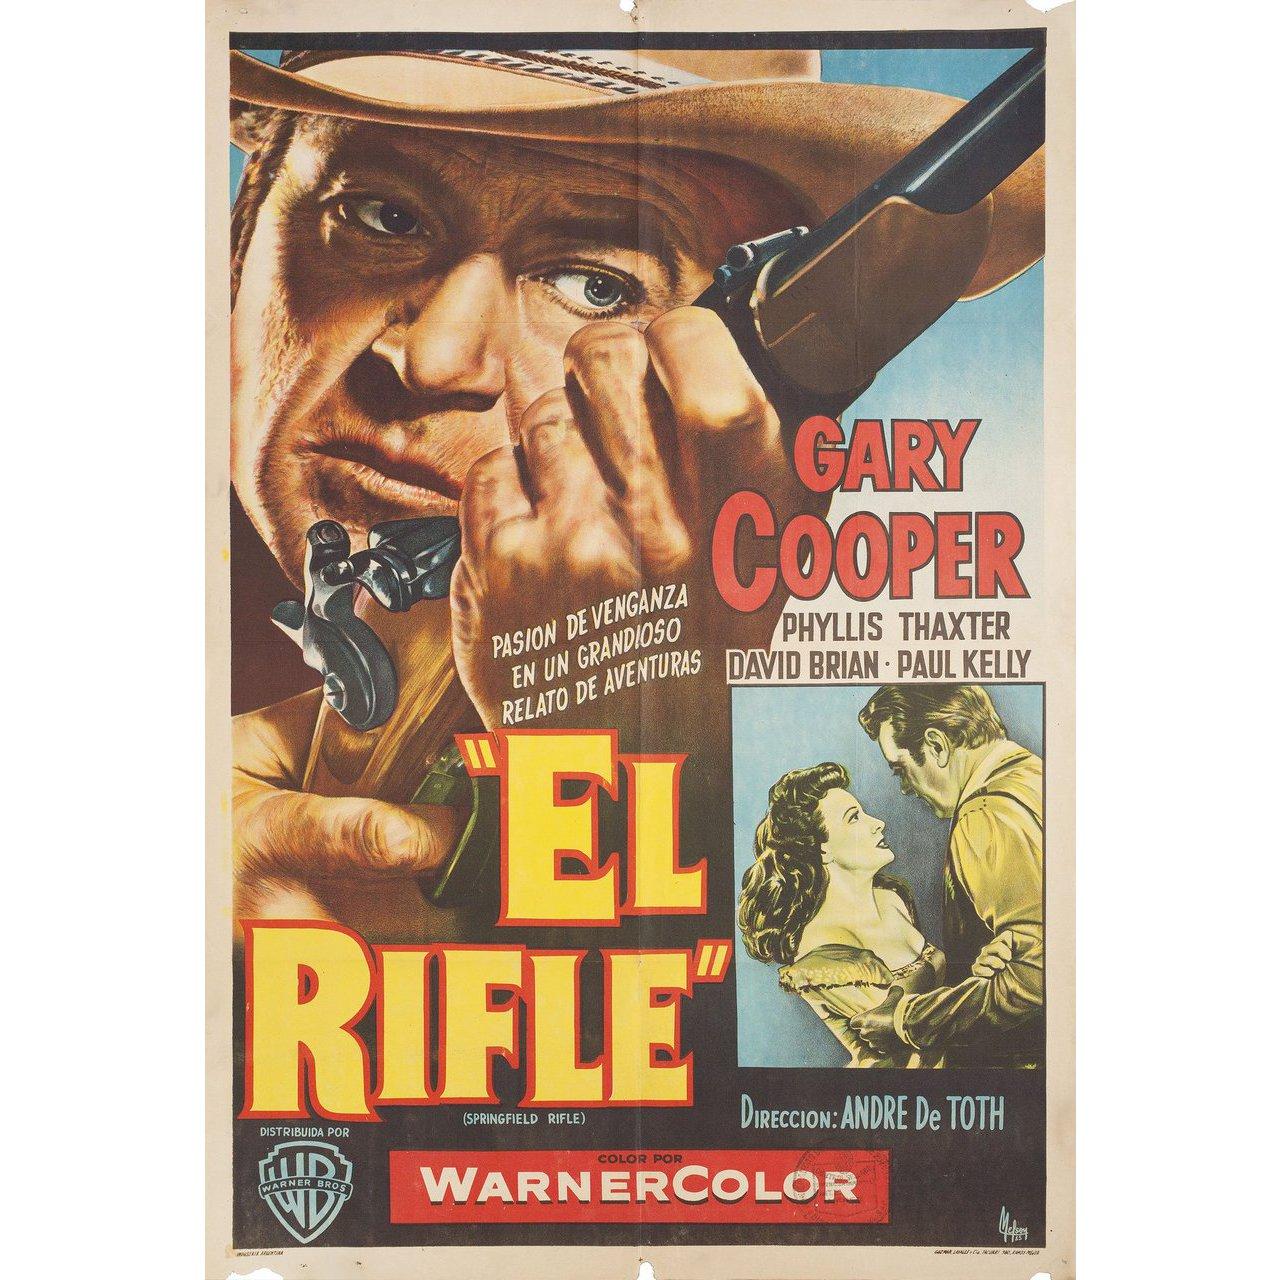 the springfield rifle film